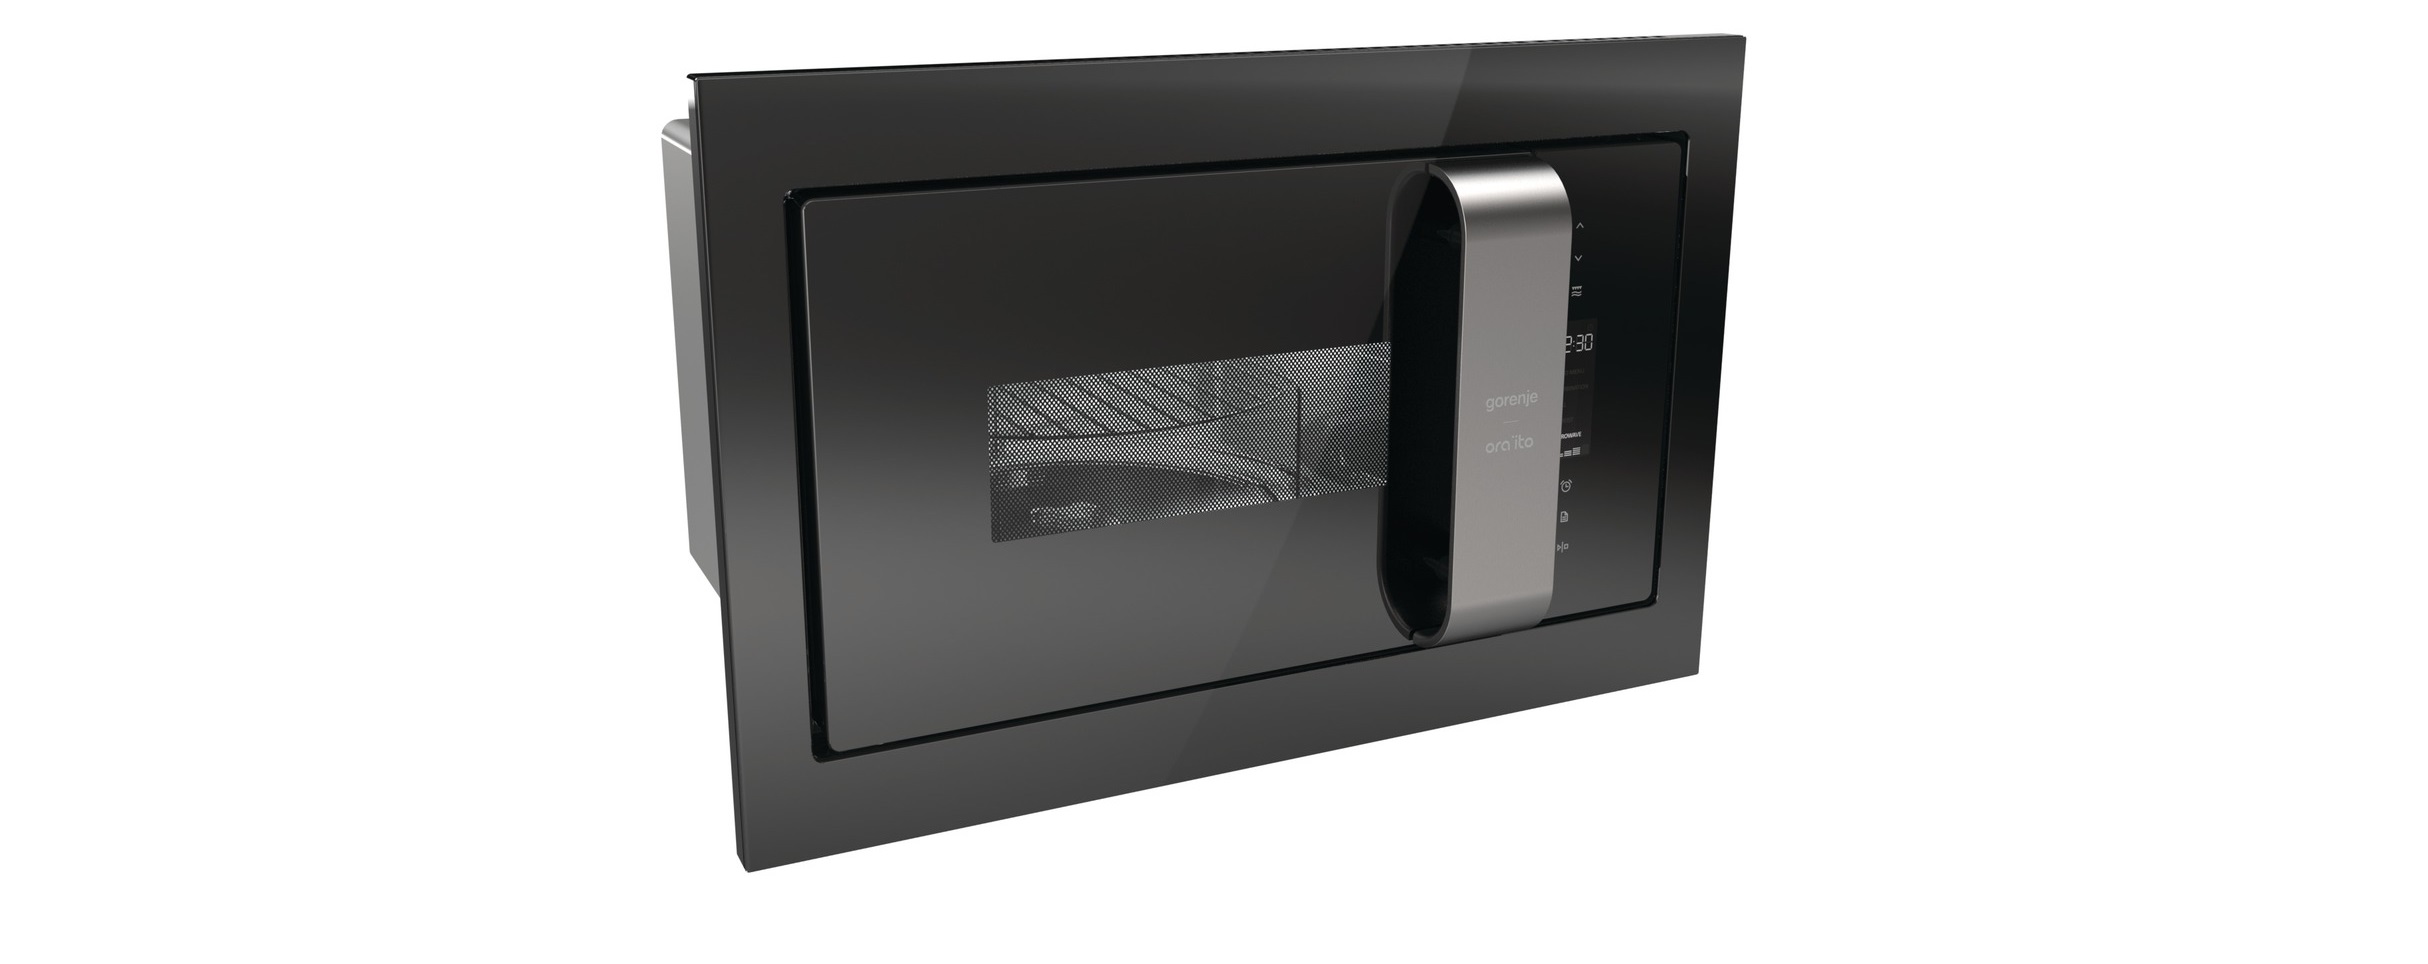 Gorenje Built-In Electric Digital 23 With Grill, cm, Black BM235ORAB - Liters, Microwave 60